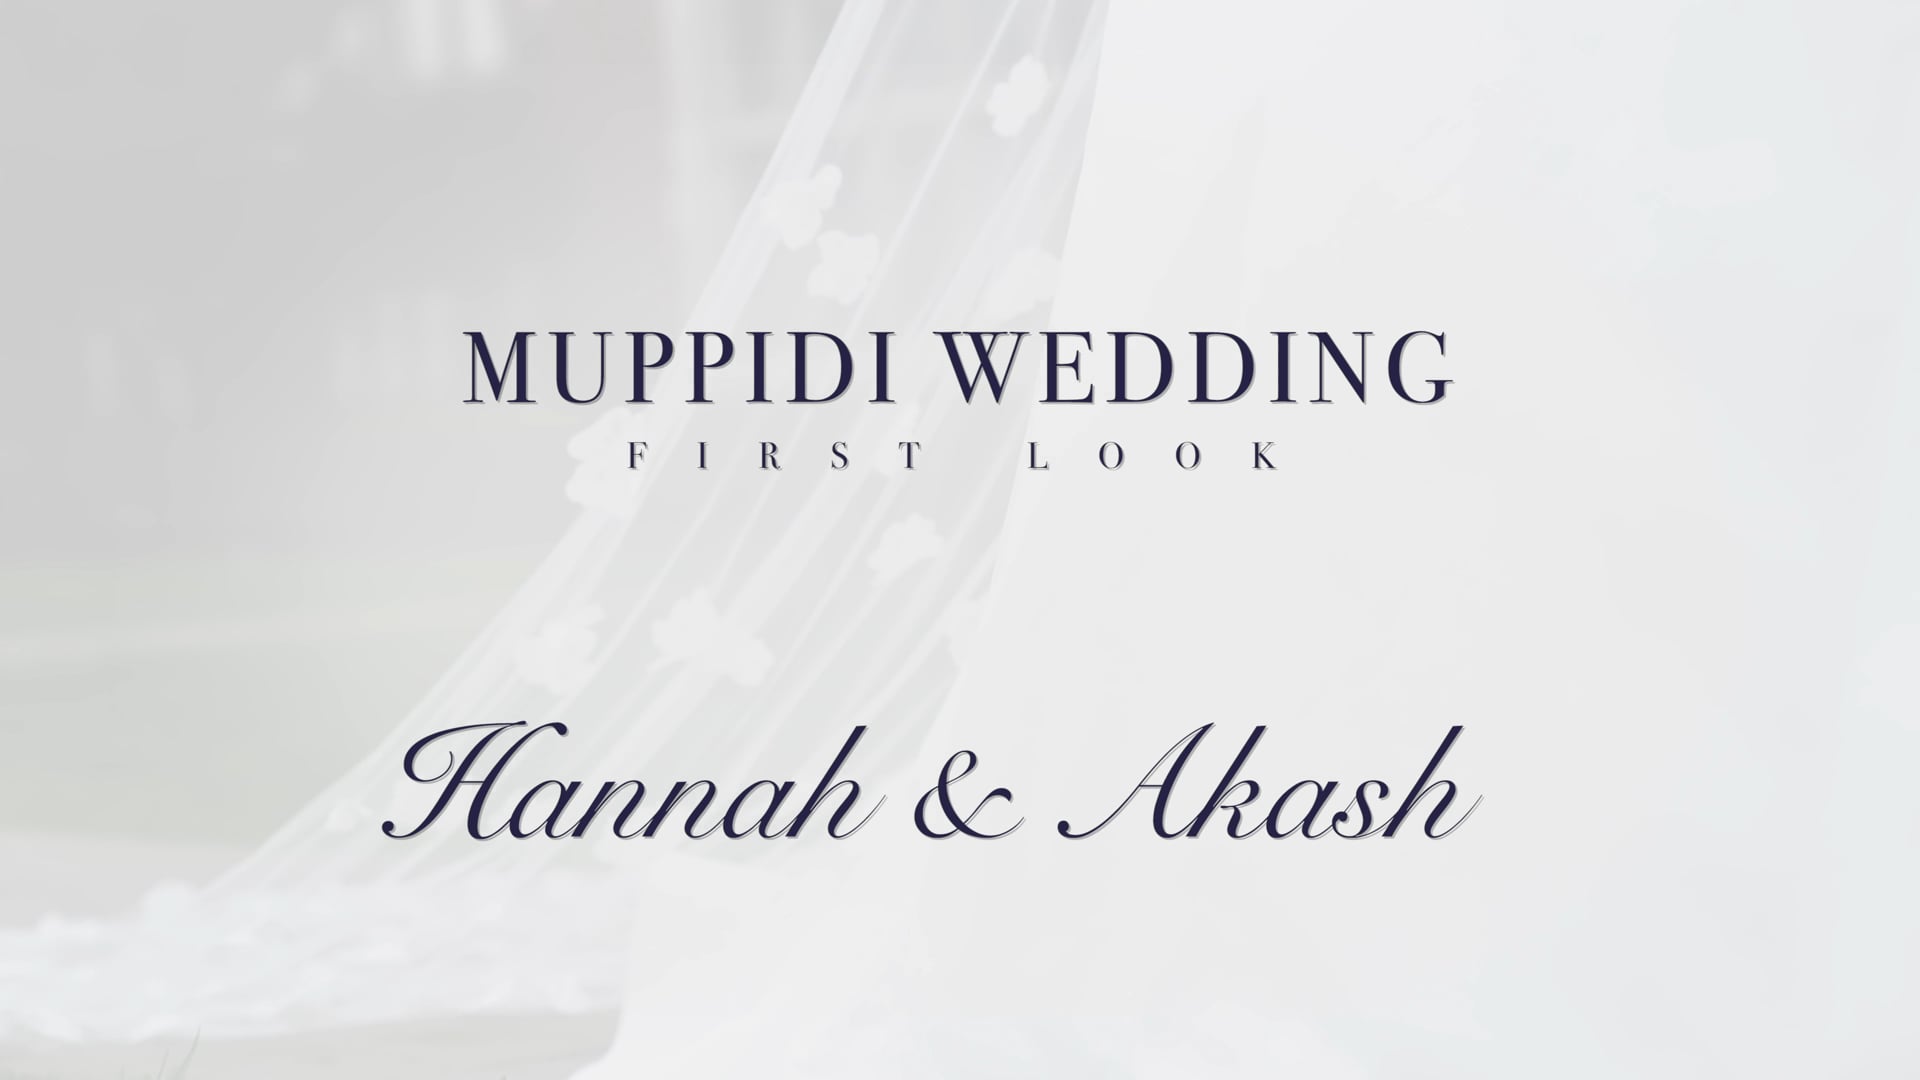 Muppidi Wedding - Couples first look